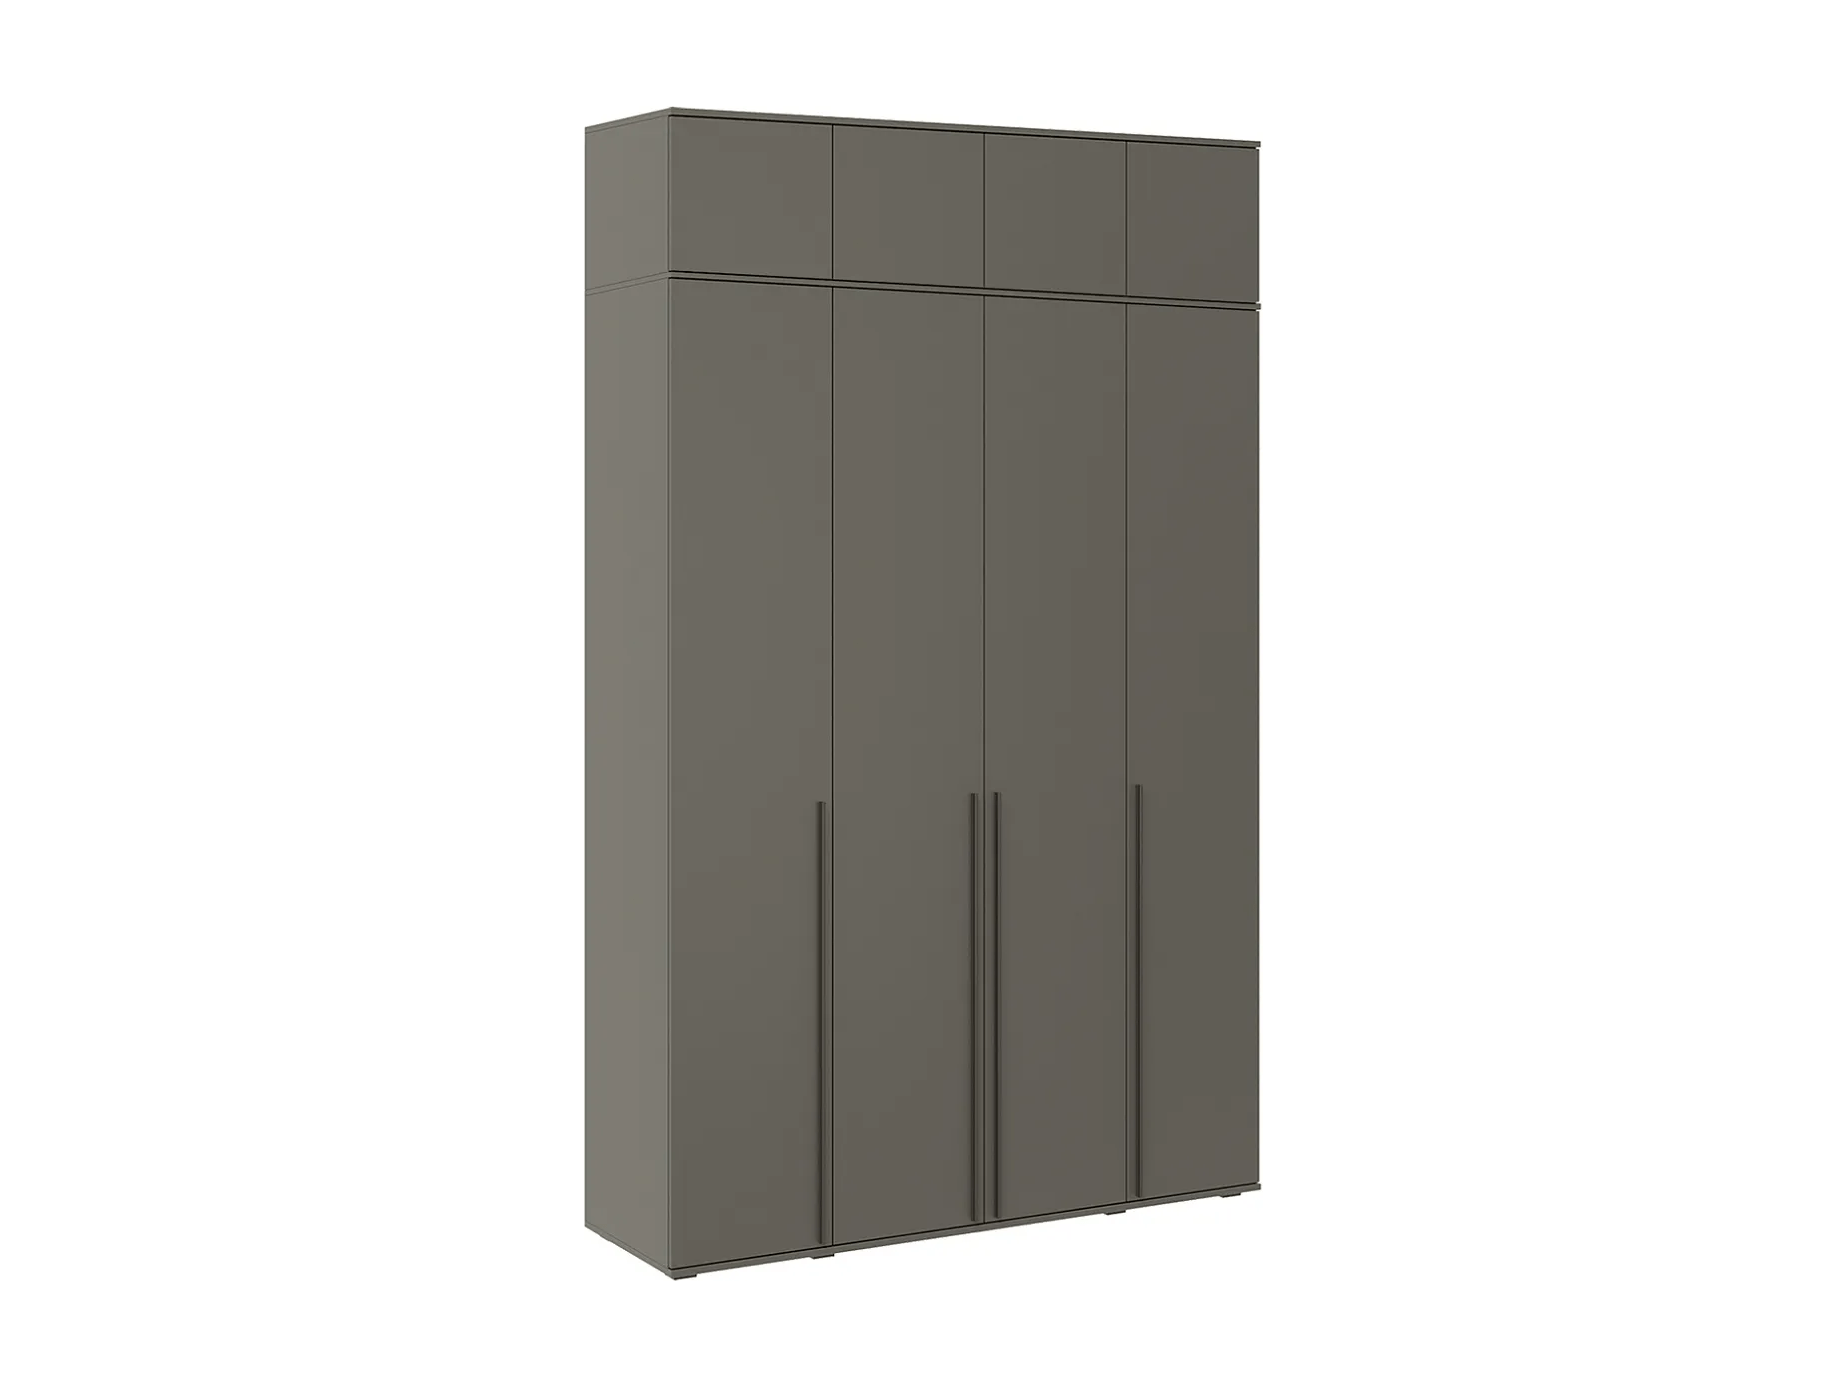 Норд Шкаф 4-х створчатый 1600 + Норд Антресоль к шкафу (1600) (графит) Черный, ЛДСП угловой шкаф норд